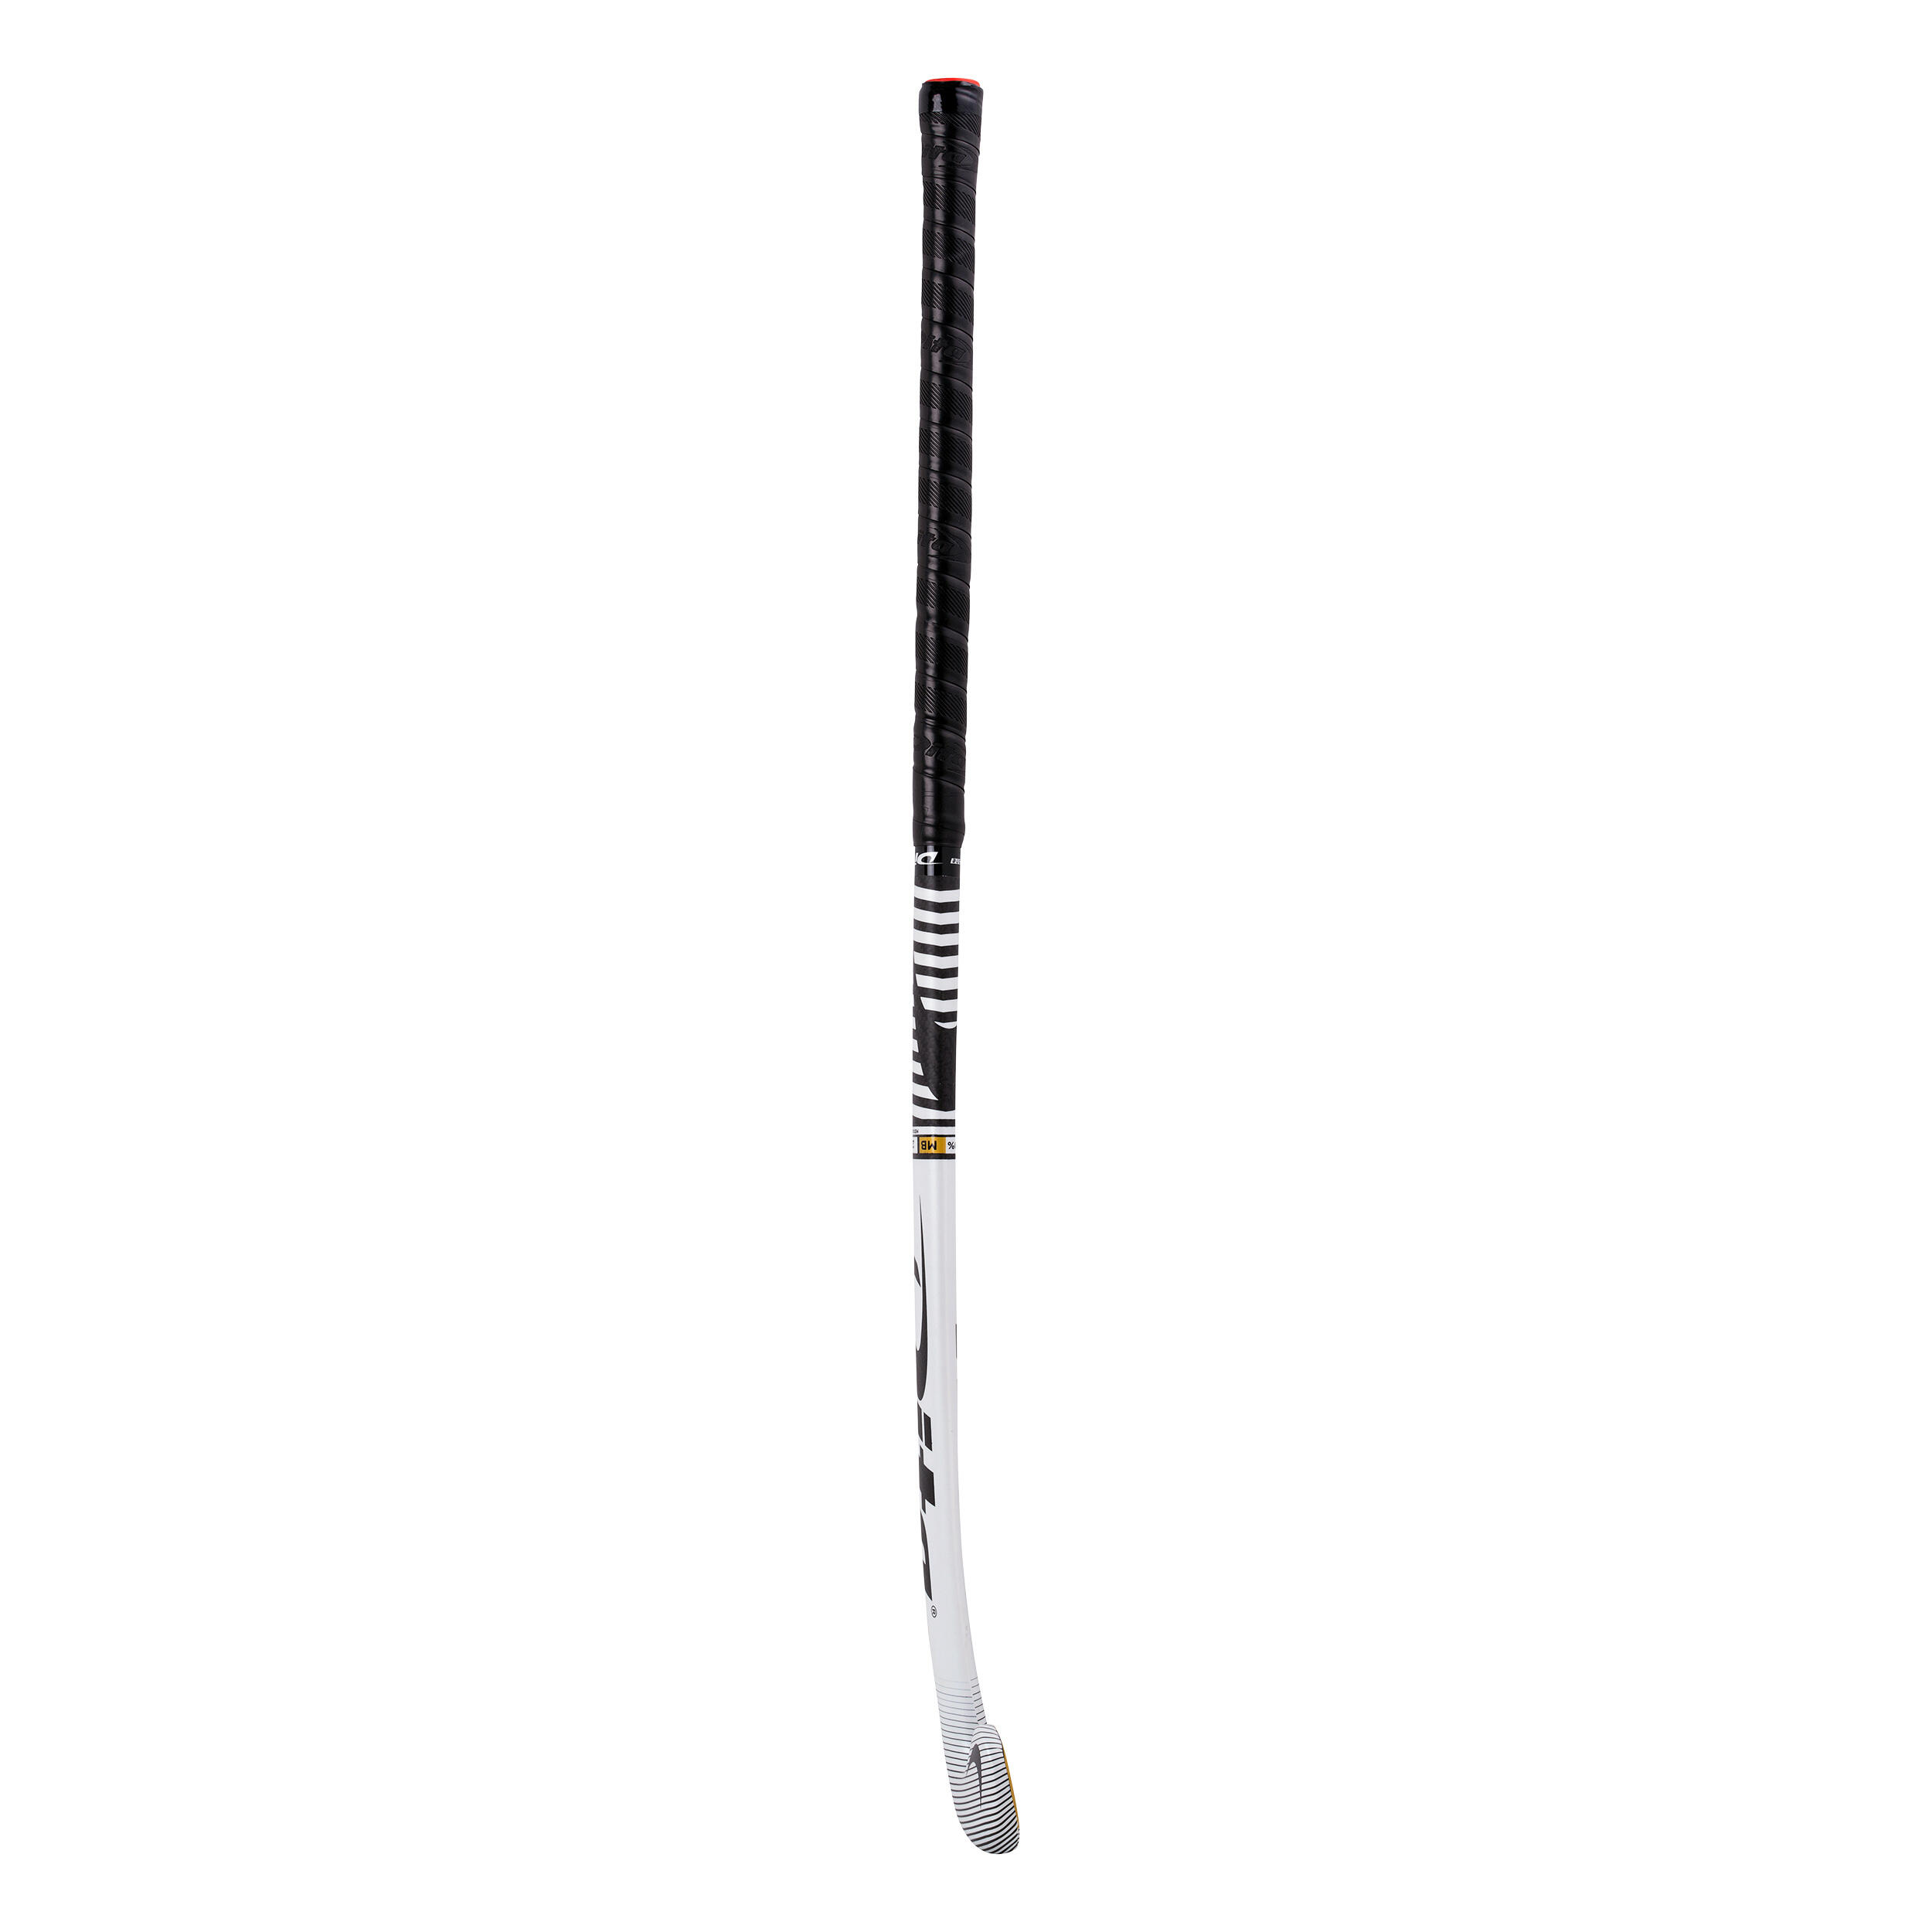 Adult Intermediate 60% Carbon Mid Bow Field Hockey Stick CompotecC60 - White/Black 12/12